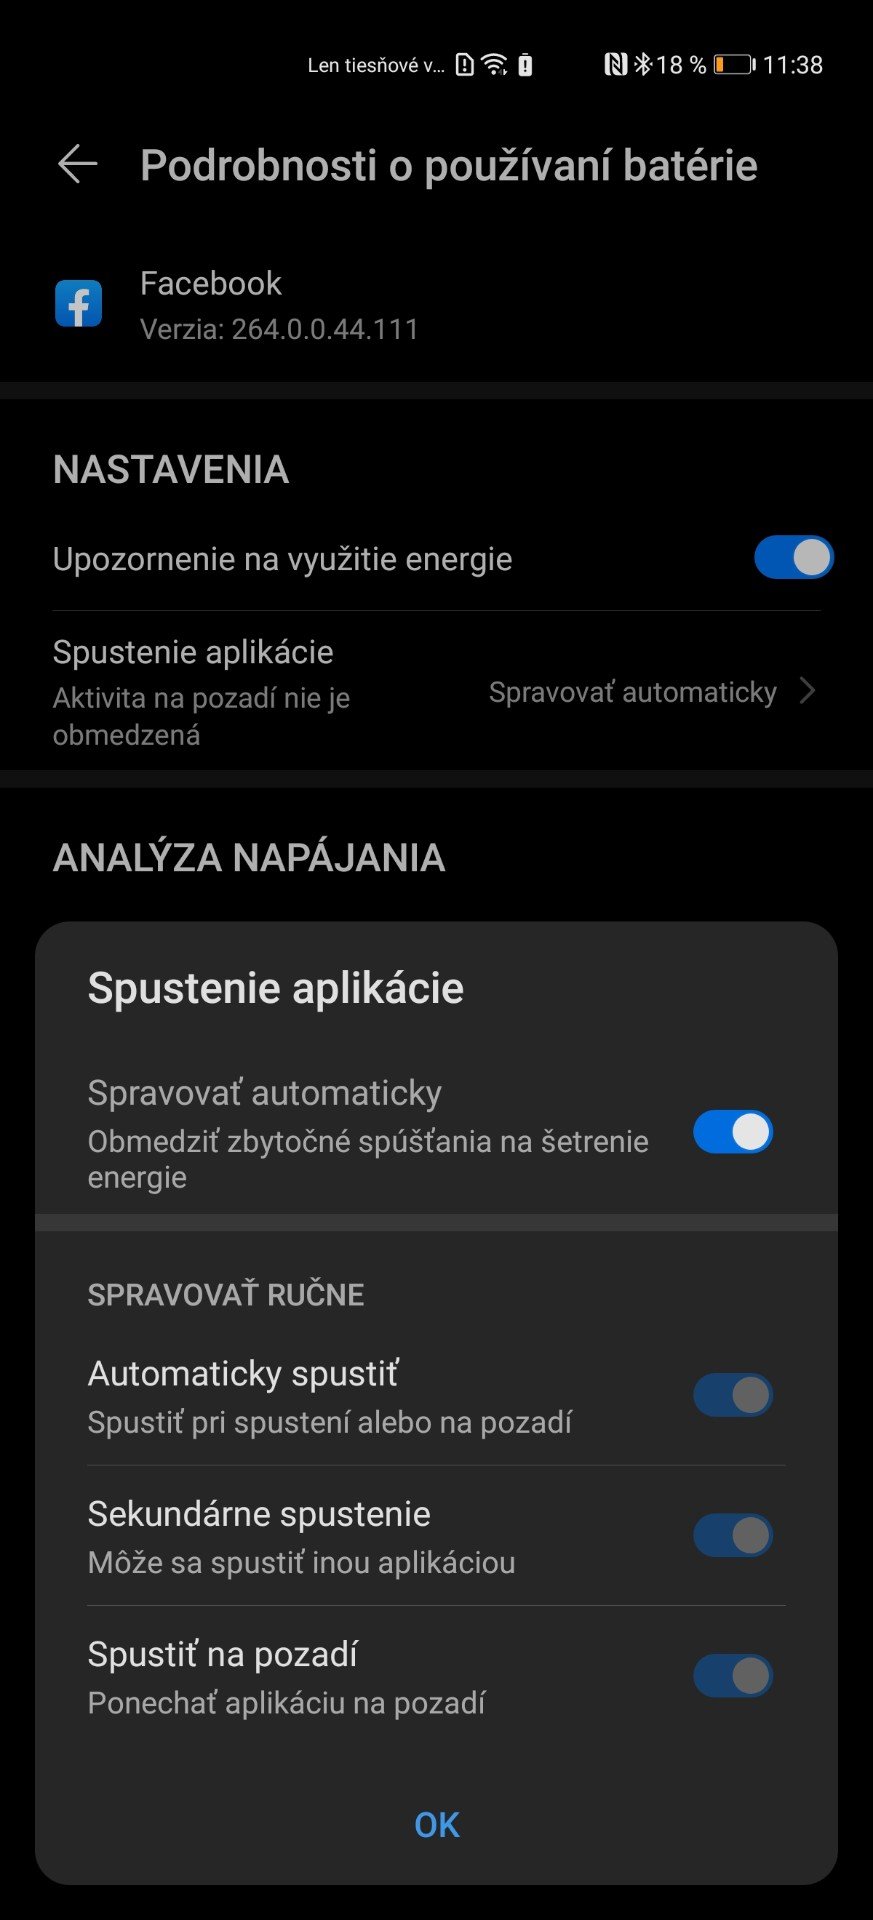 Huawei_sprava aplikacii a manazment batiere_3